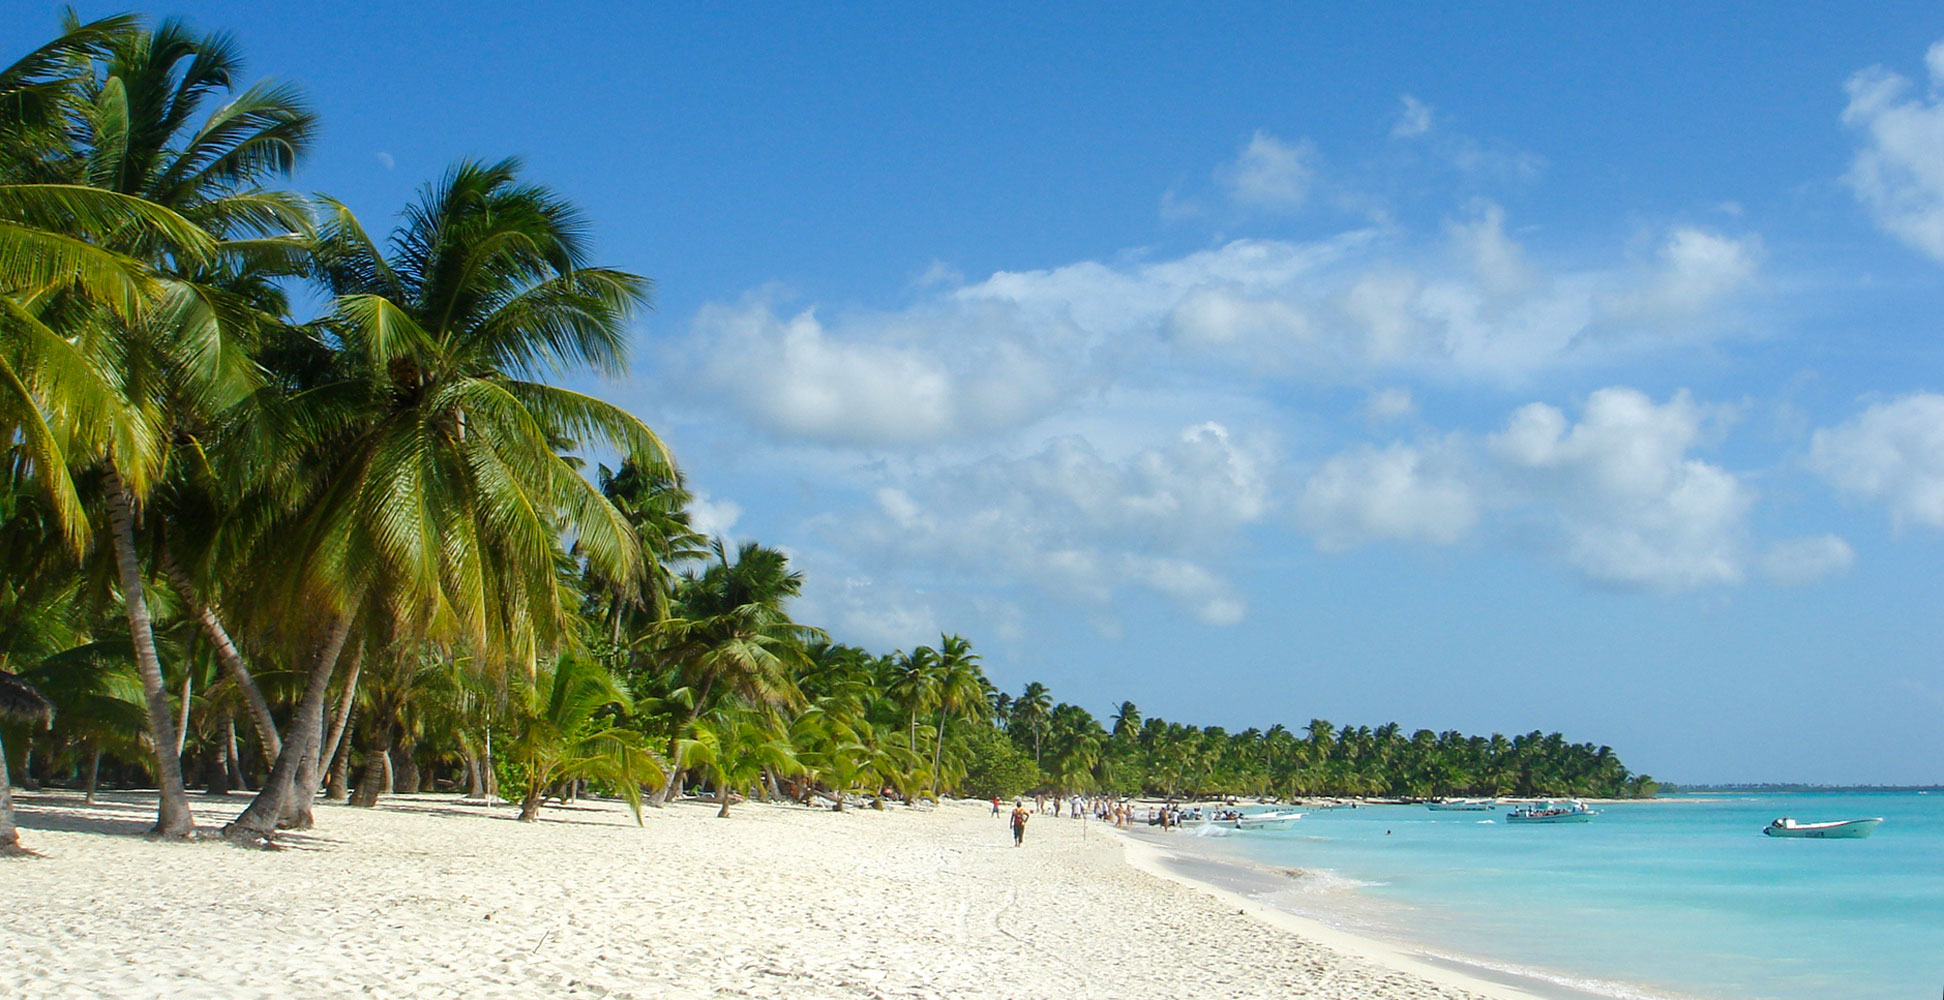 The palm-fringed beach of Isla Saona, Dominican Republic